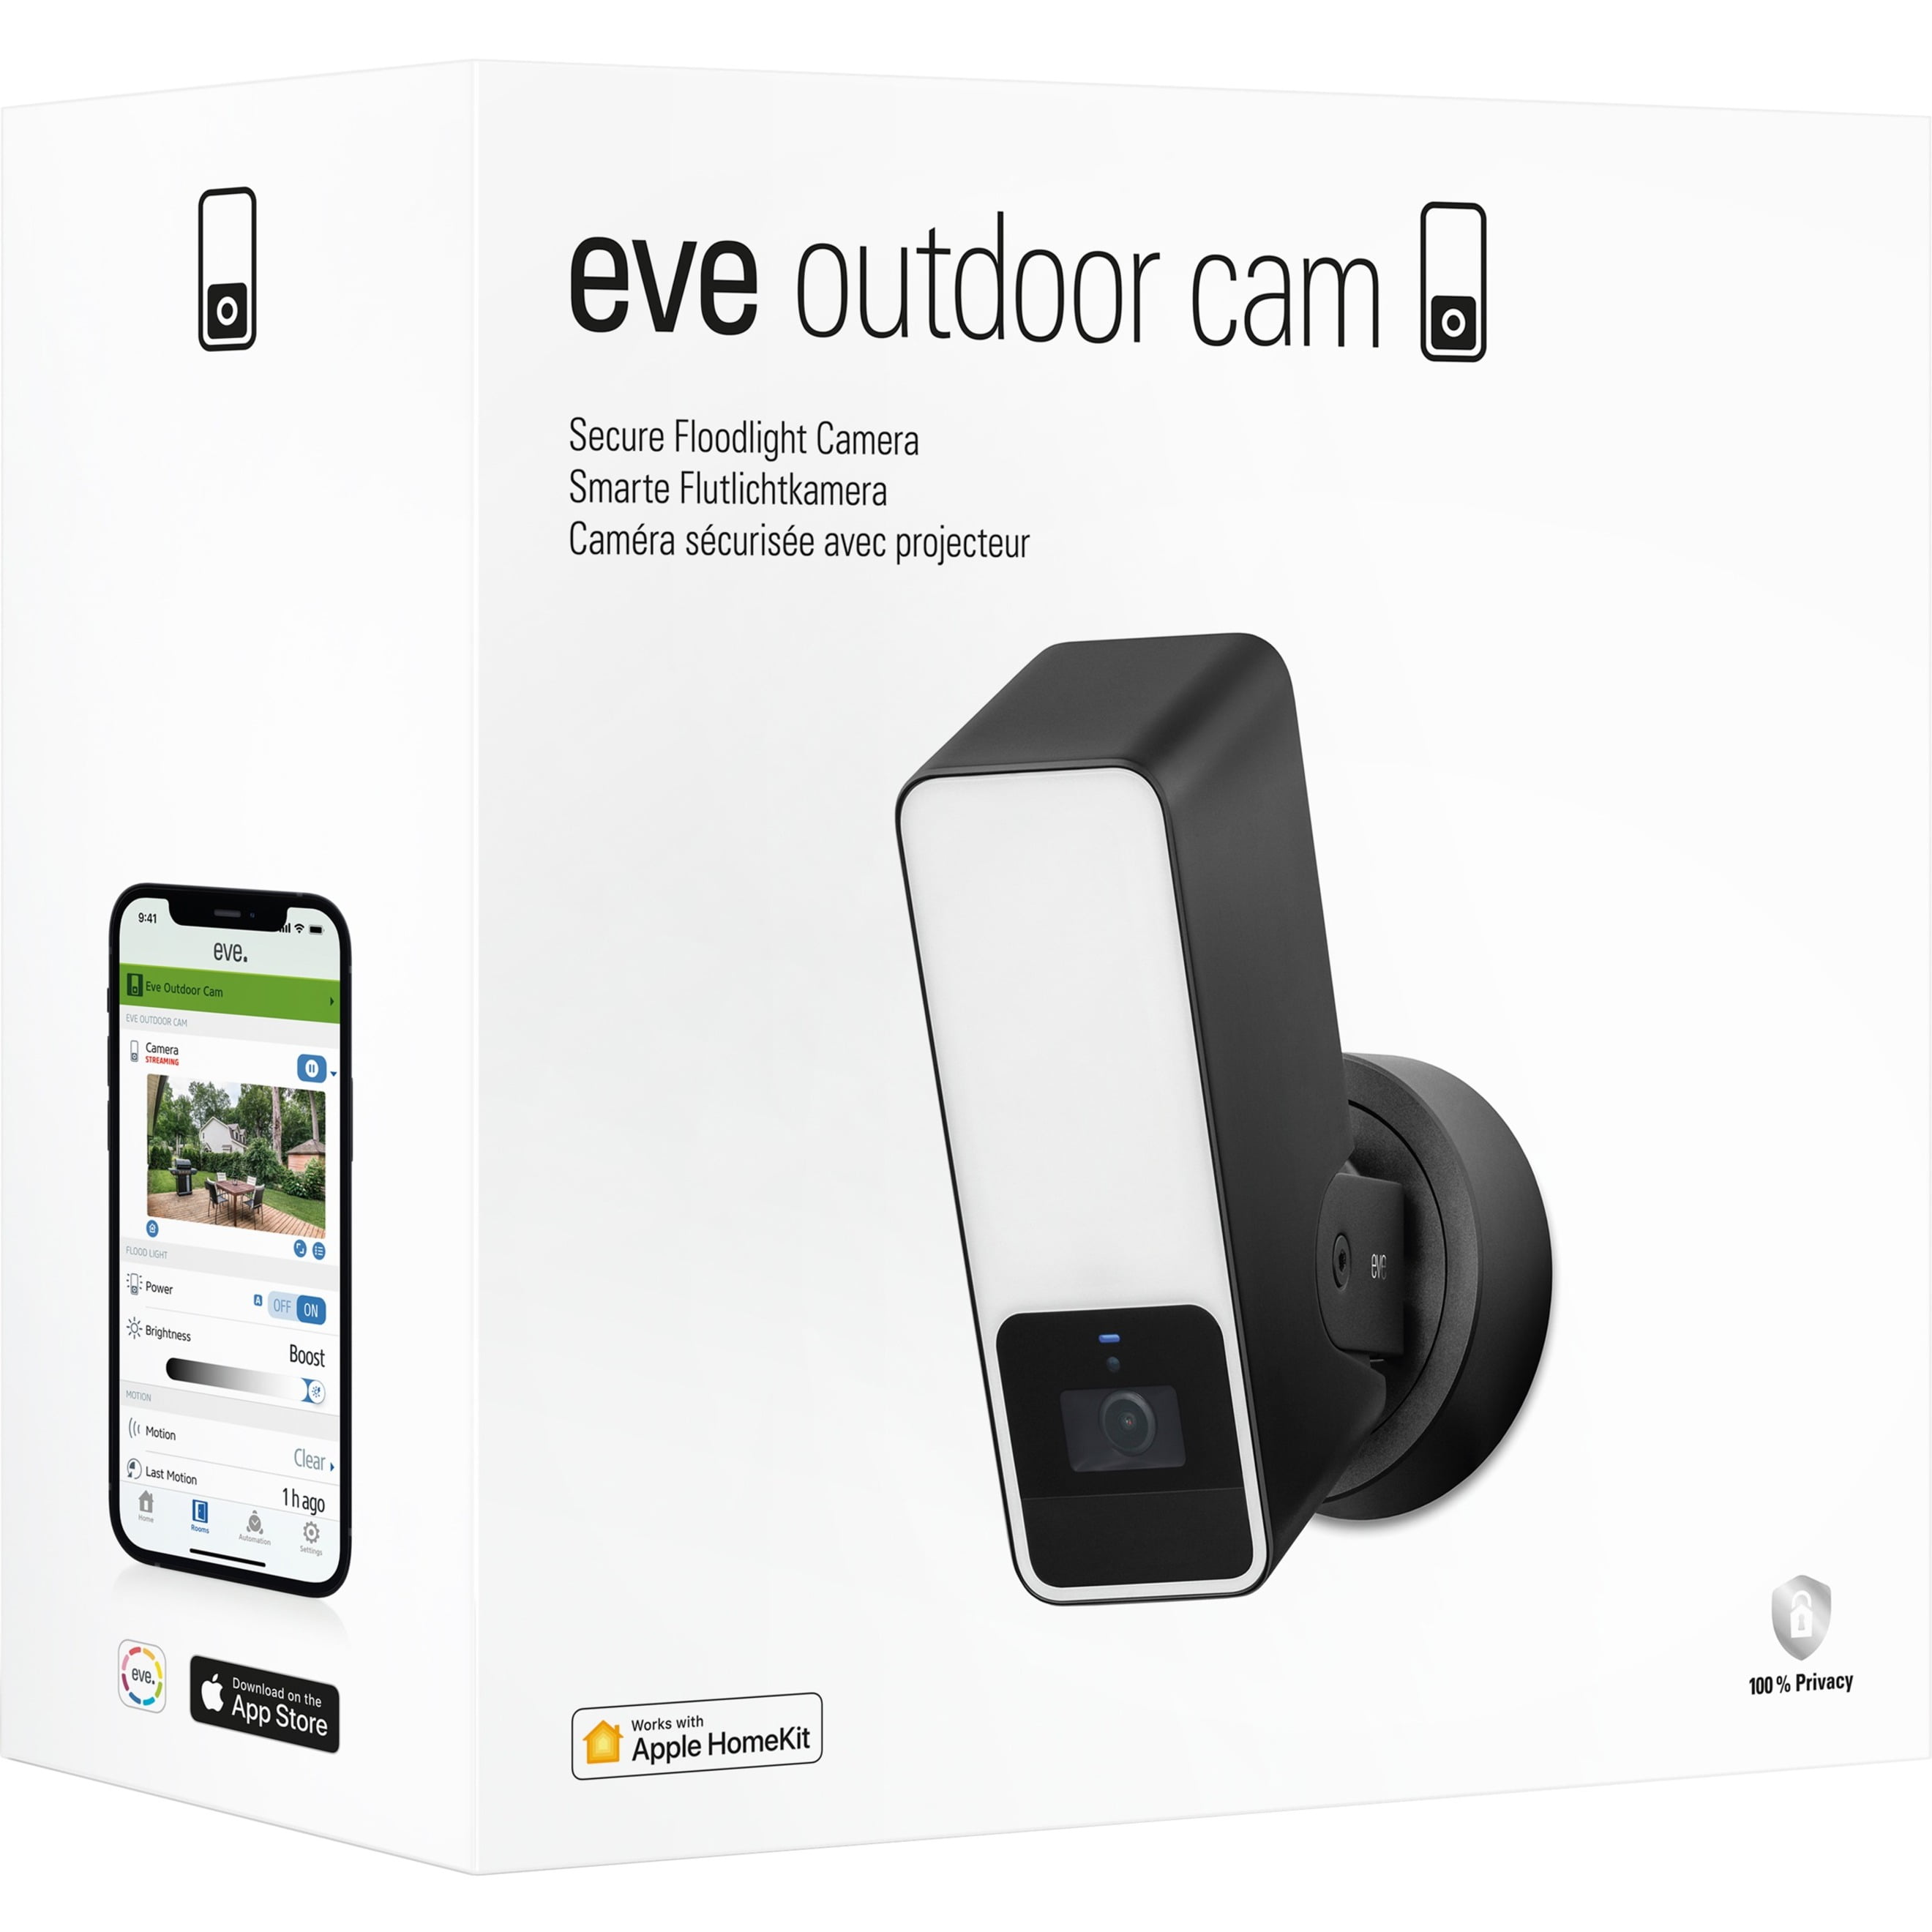 Eve Outdoor Cam, Secure floodlight camera with Apple HomeKit